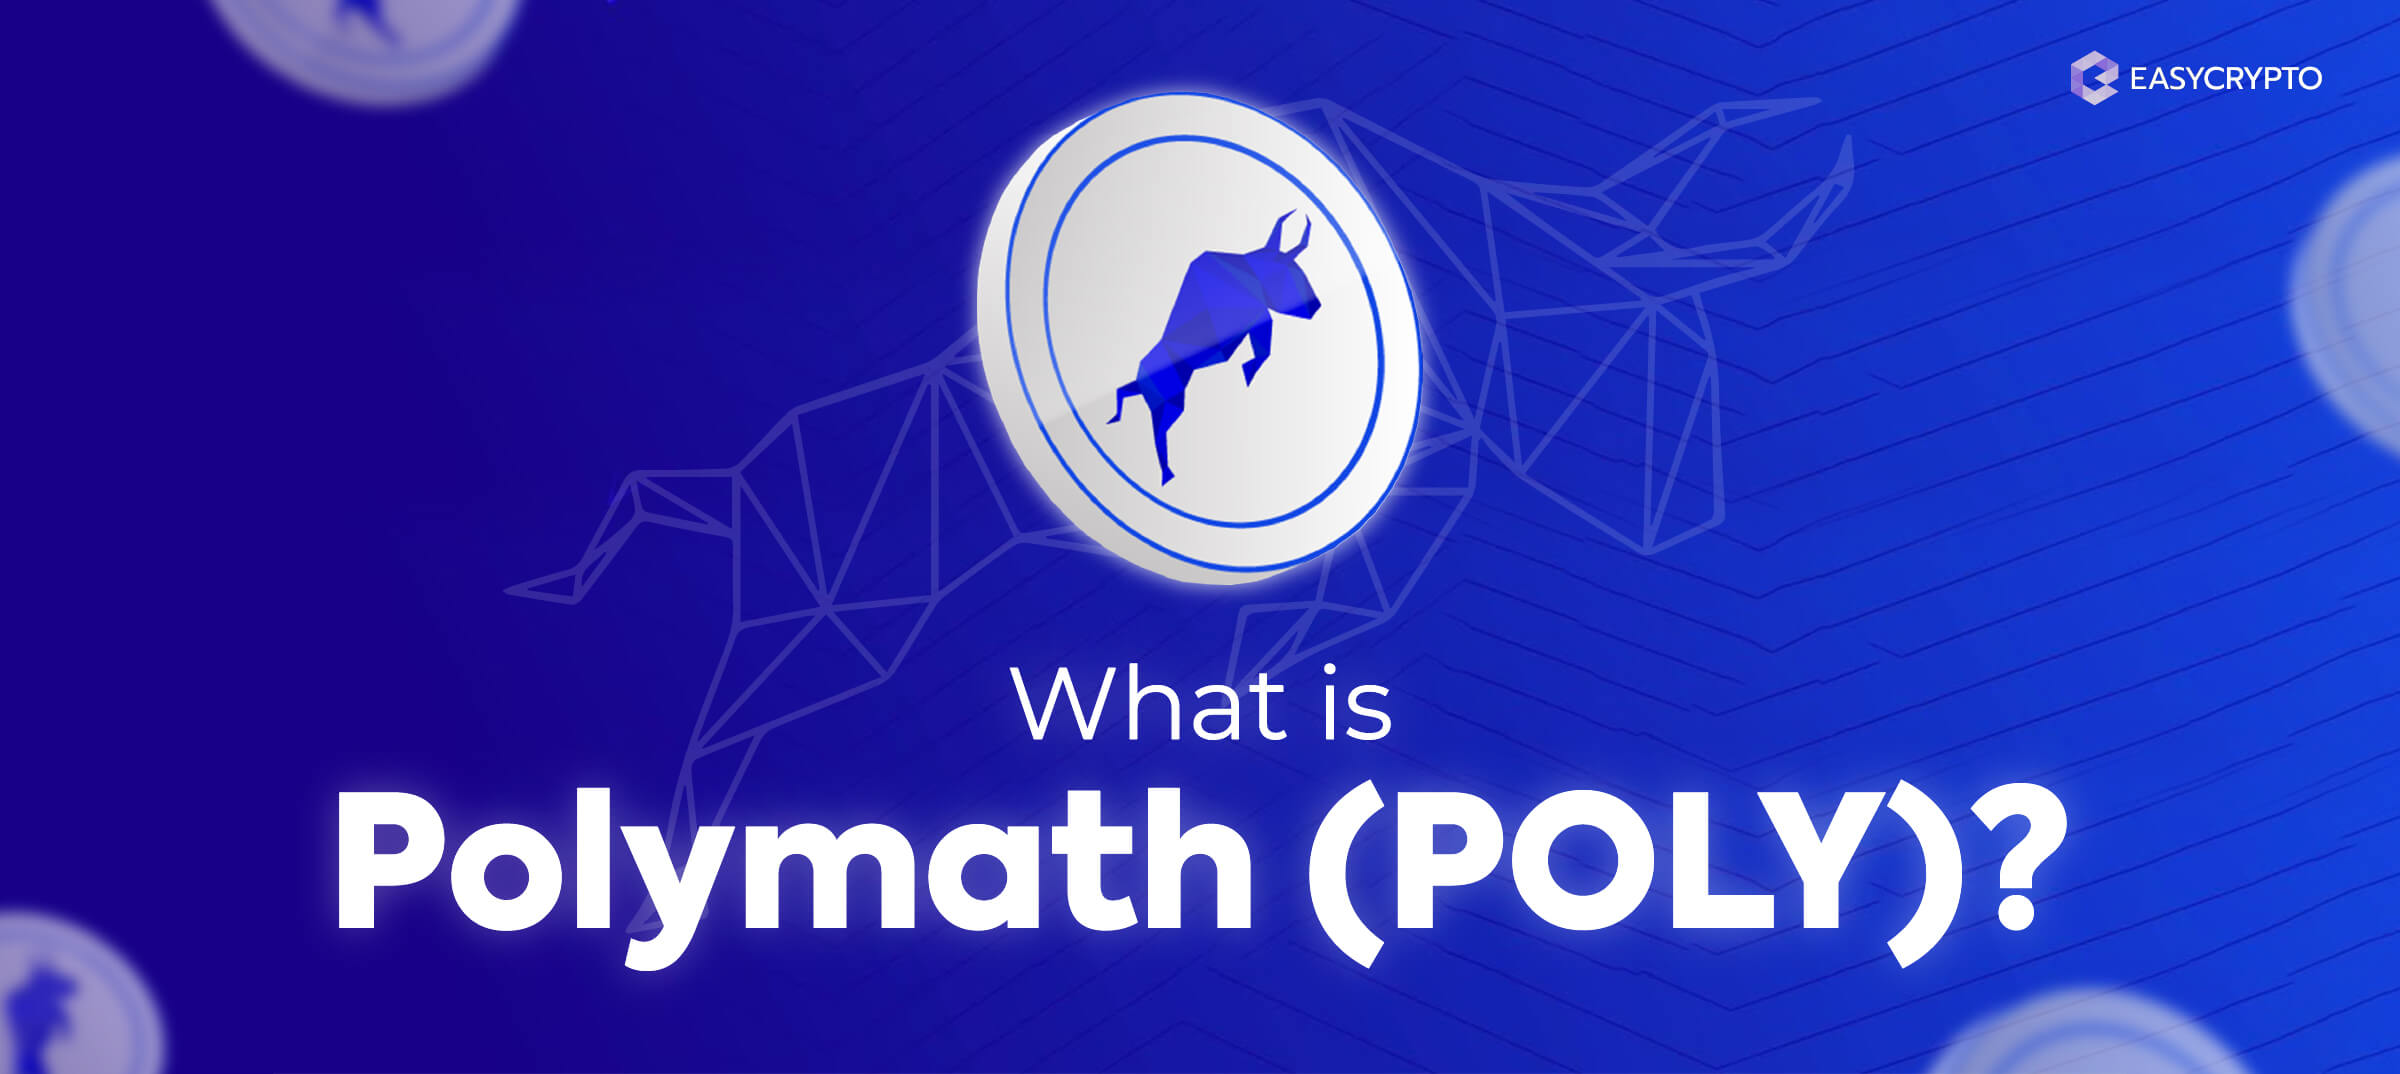 polymath crypto